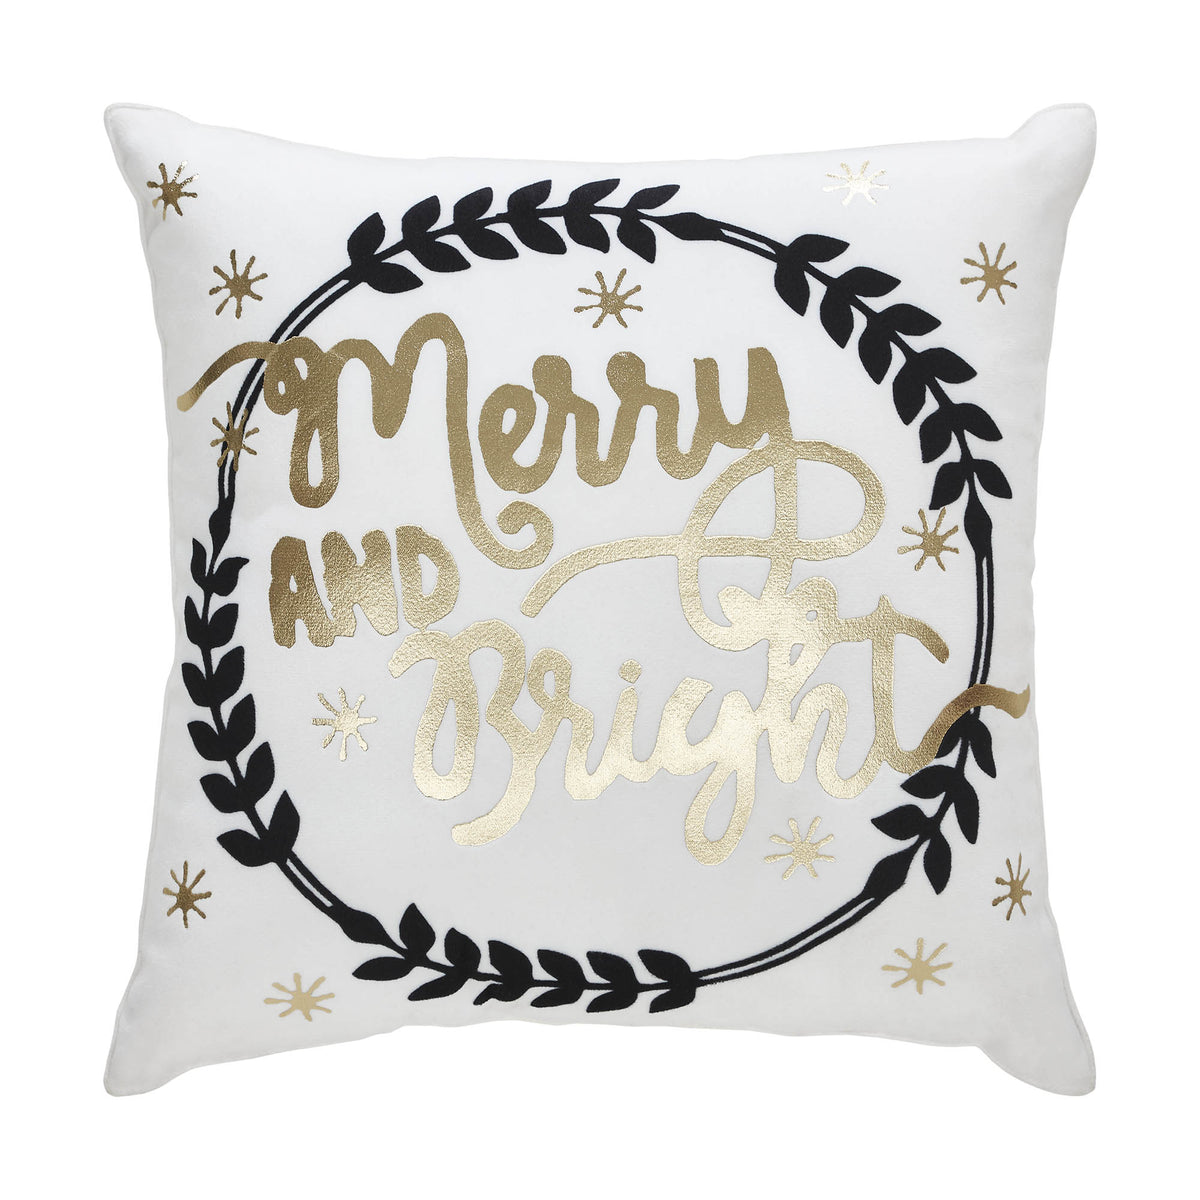 Wintergleam Merry and Bright Pillow 14x14